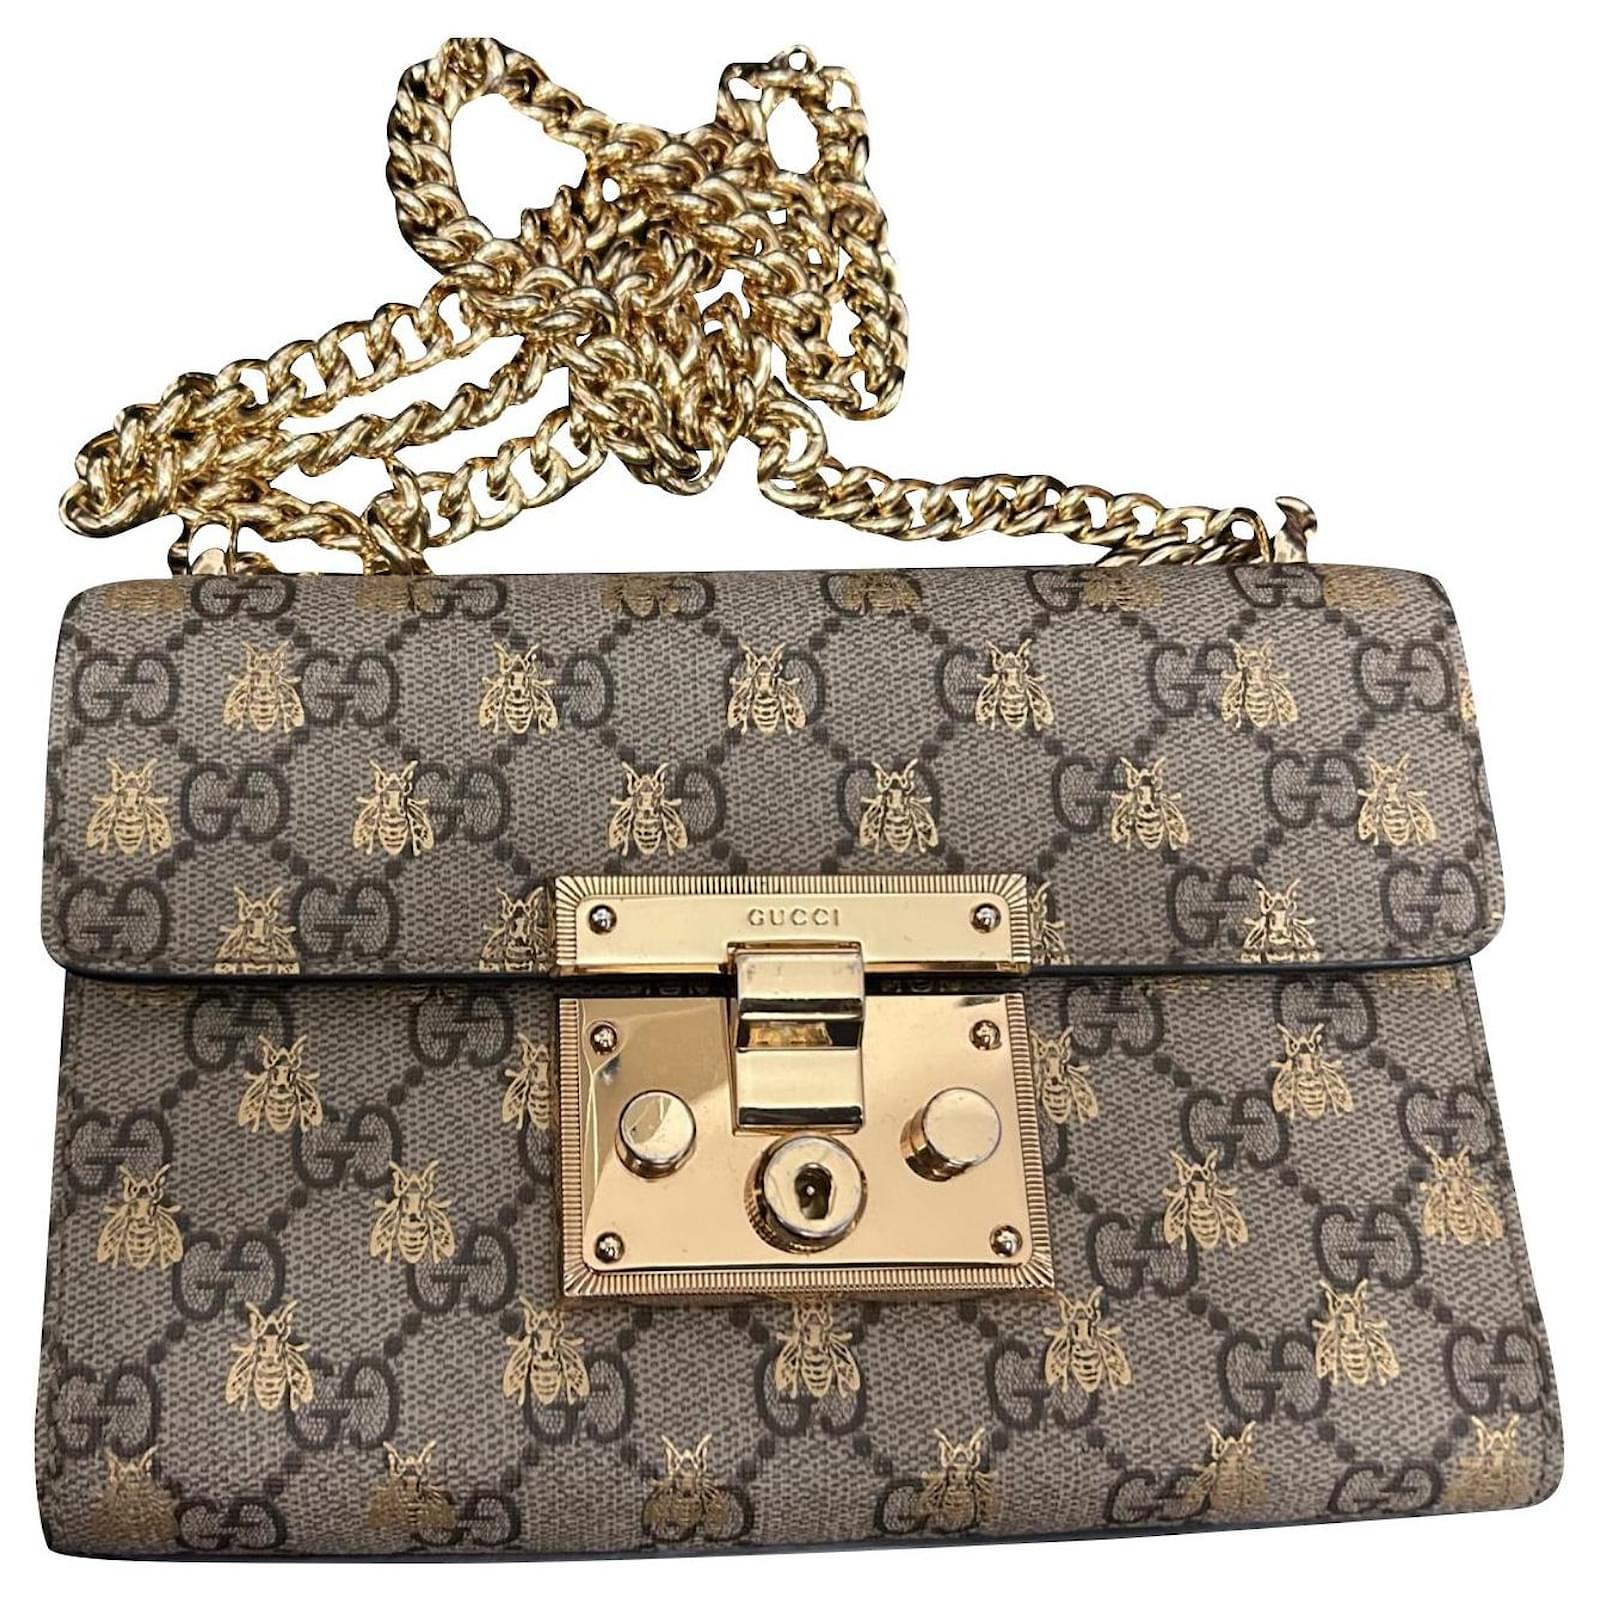 Bags, Leather shoulder bag, Gucci padlock